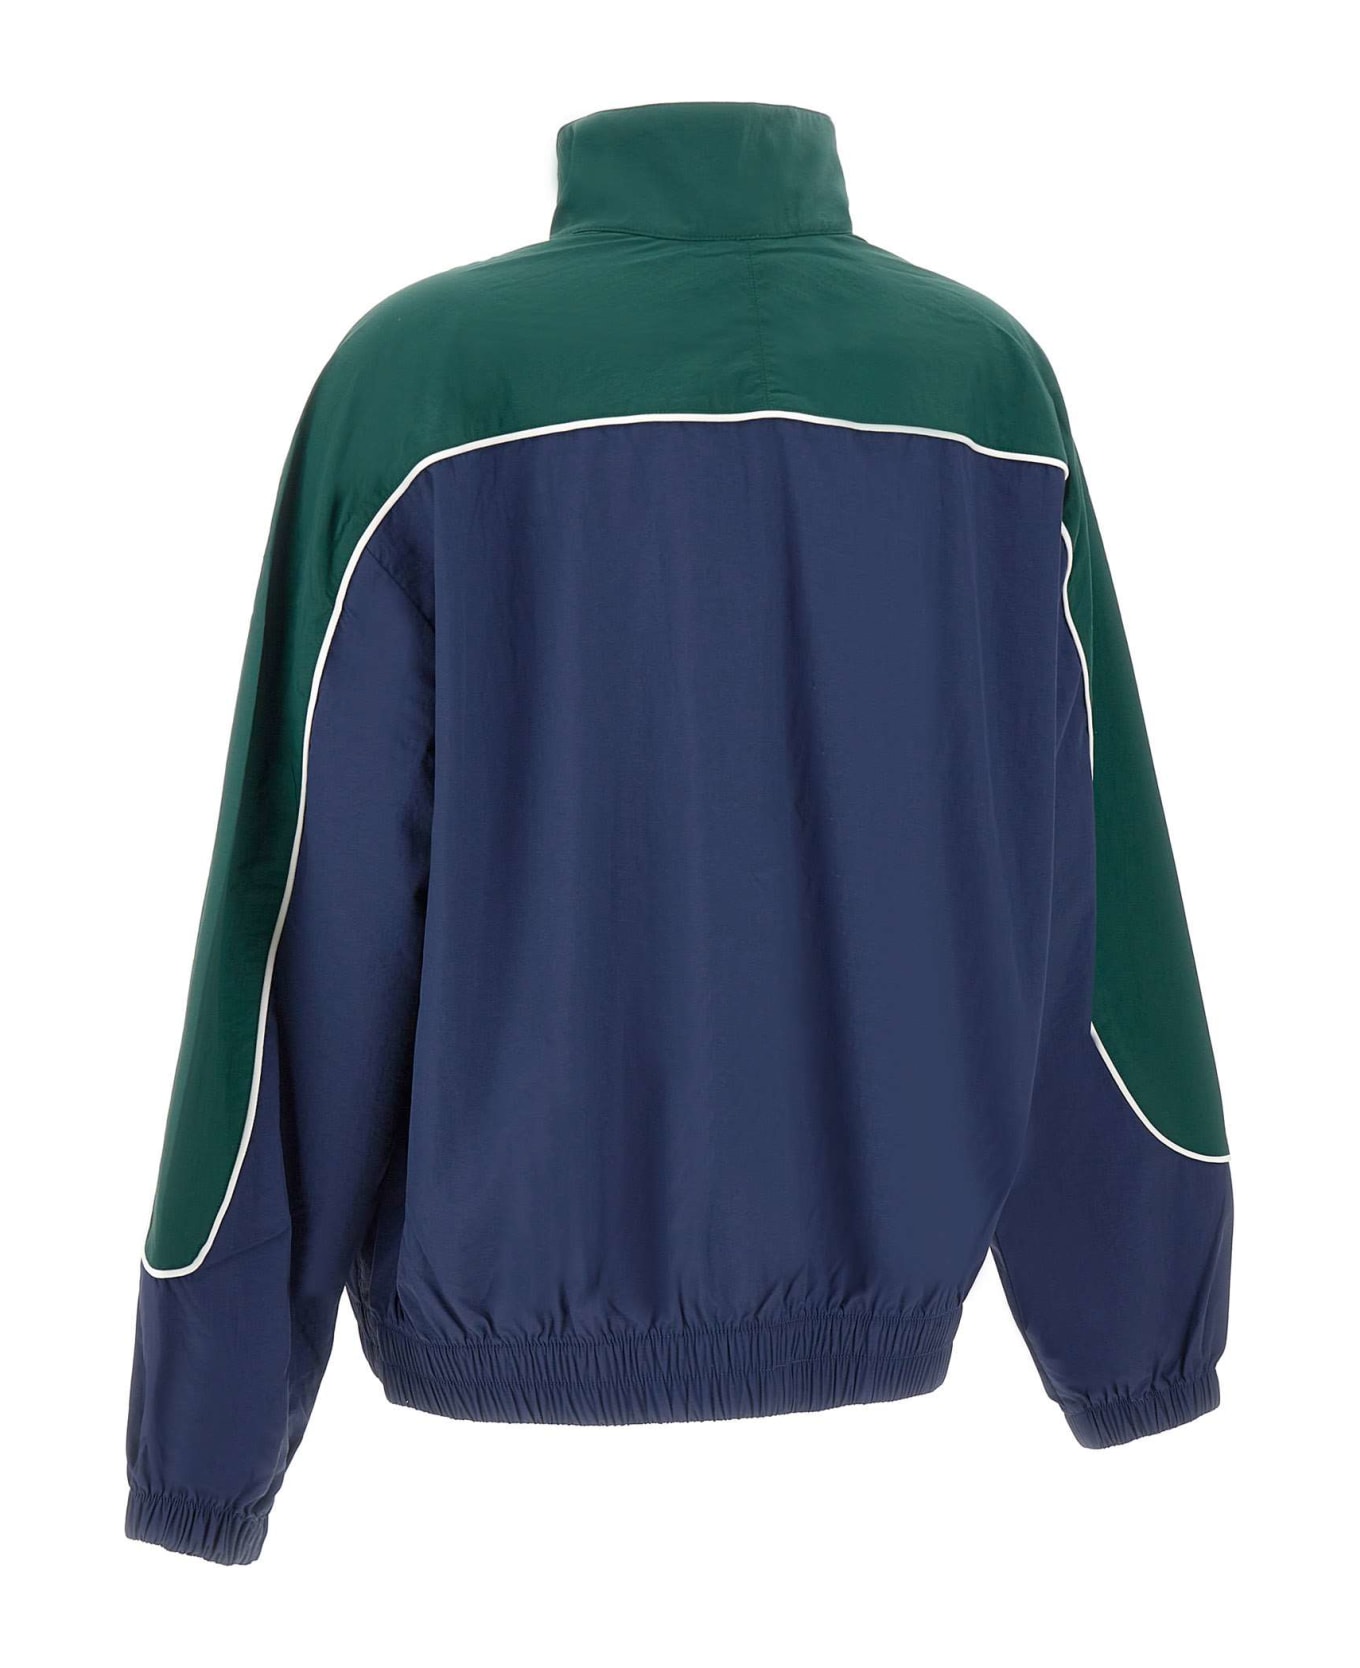 New Balance "sportswear's Greatest Hits" Jacket - BLUE/green